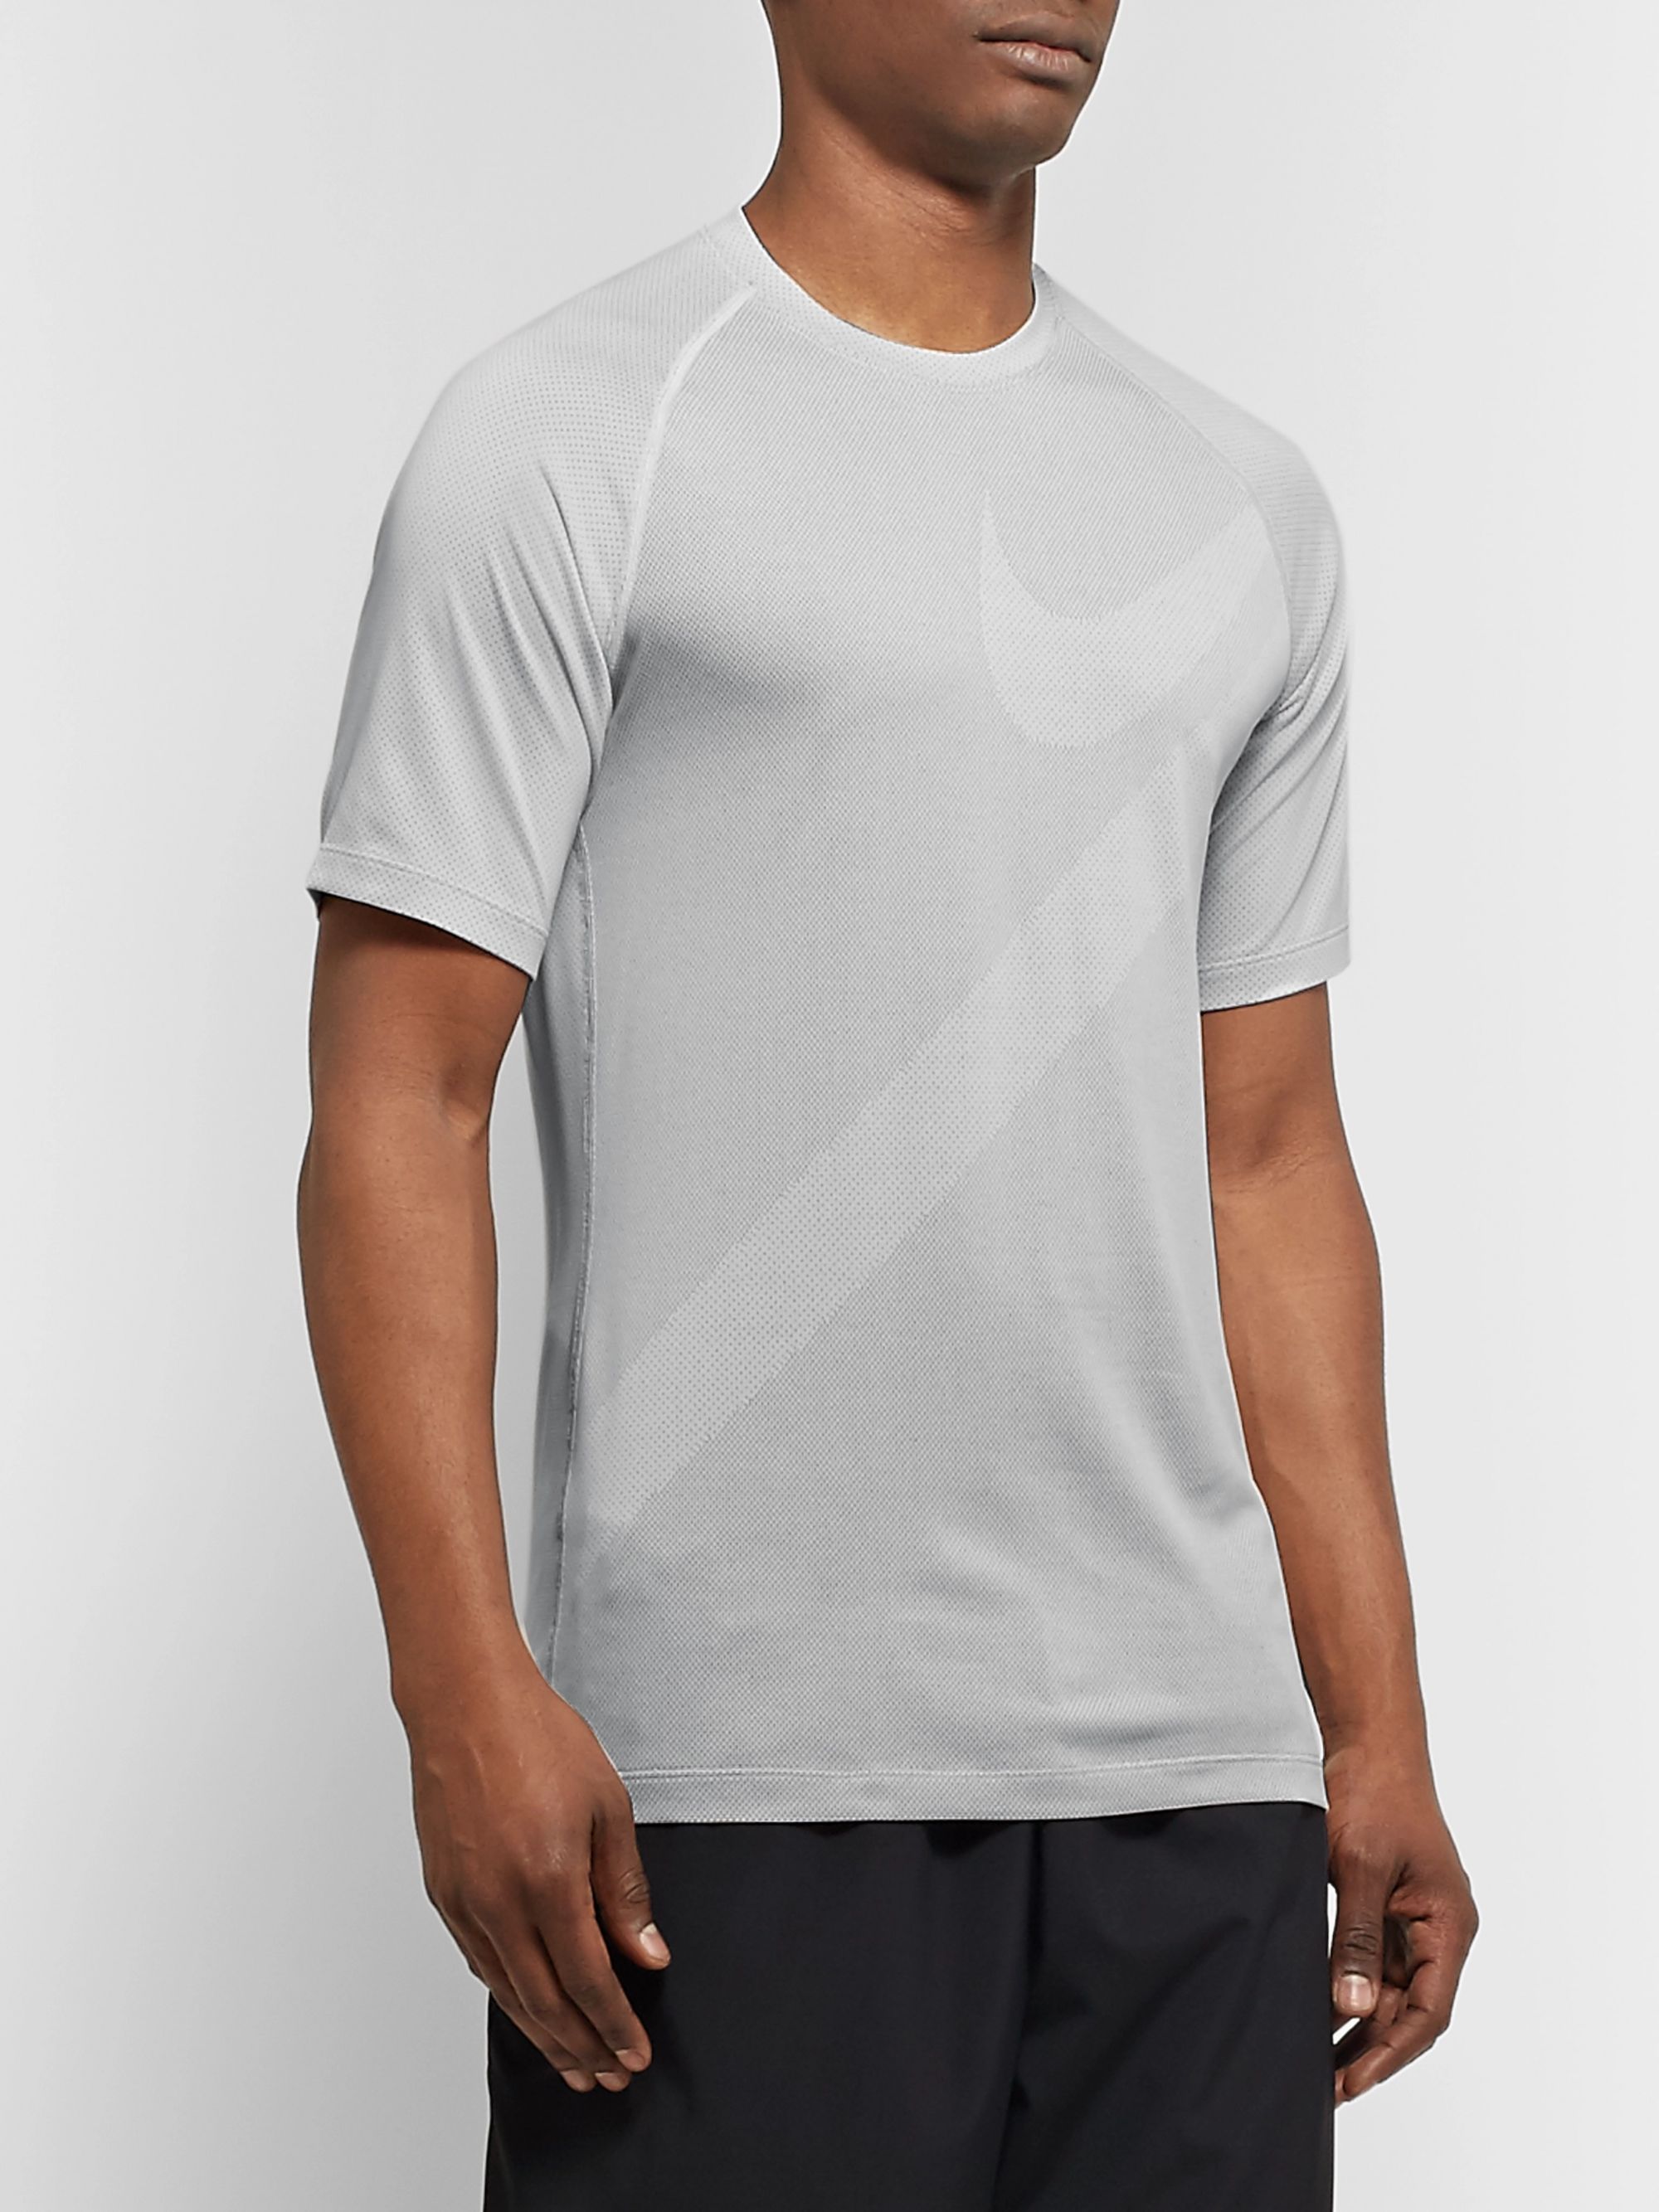 Nike dri fit pro training t shirt samui cheap